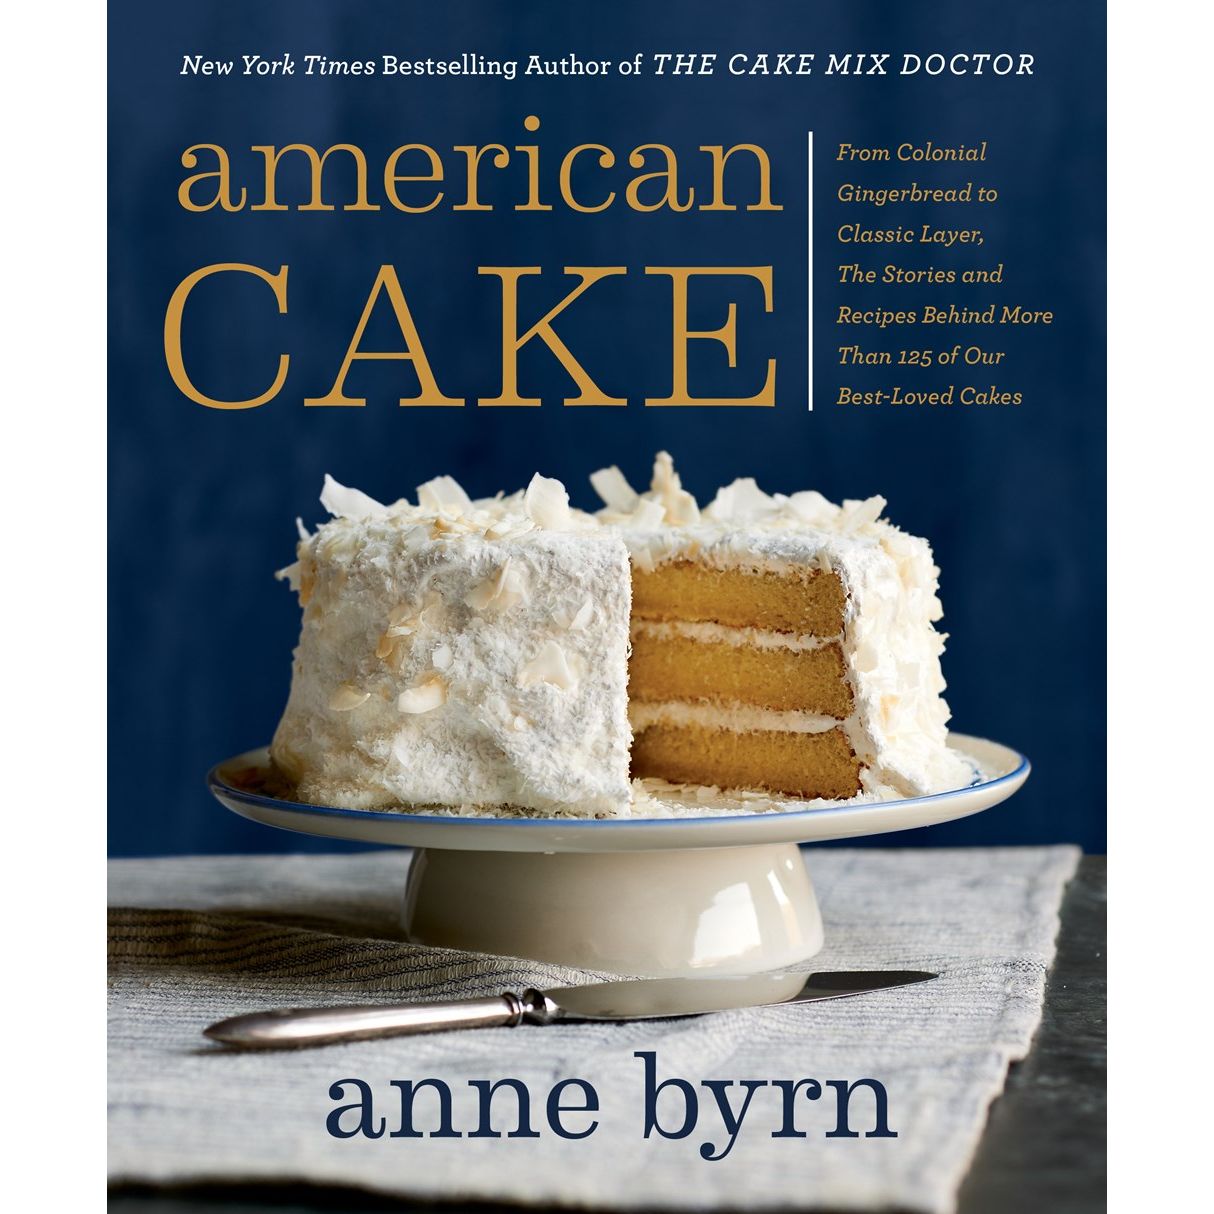 American Cake (Anne Byrn)